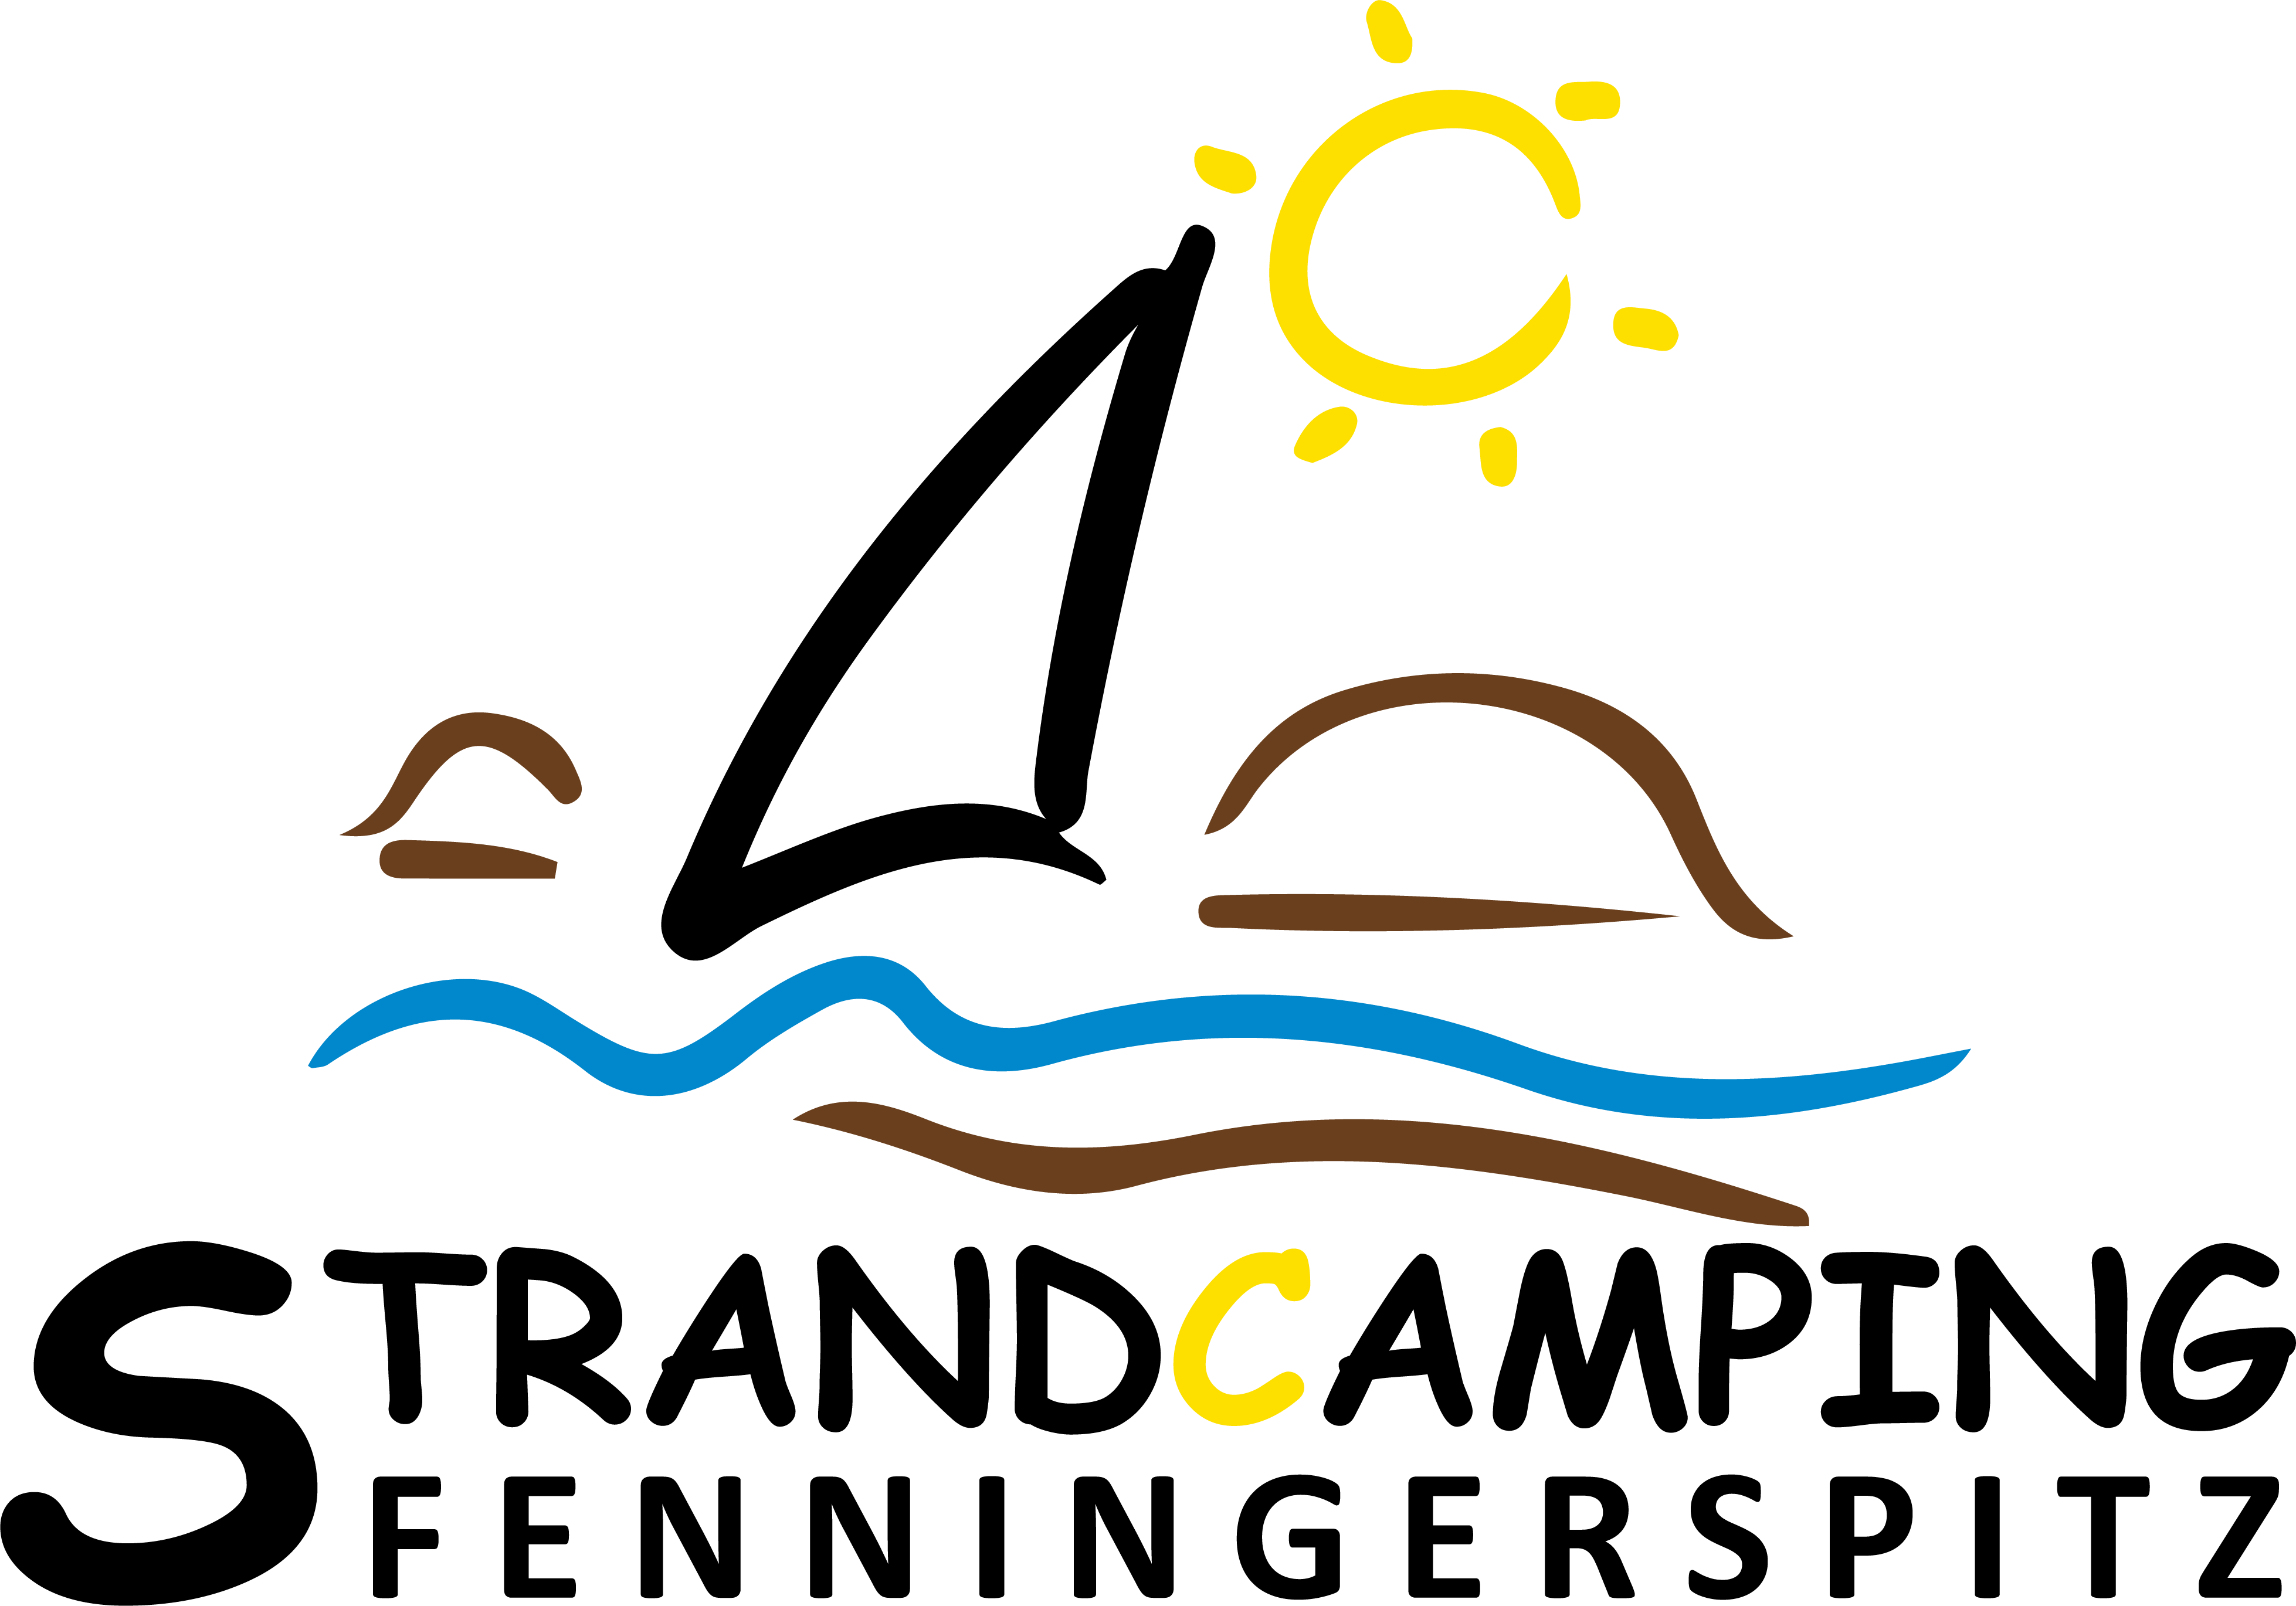 Camping Fenningerspitz